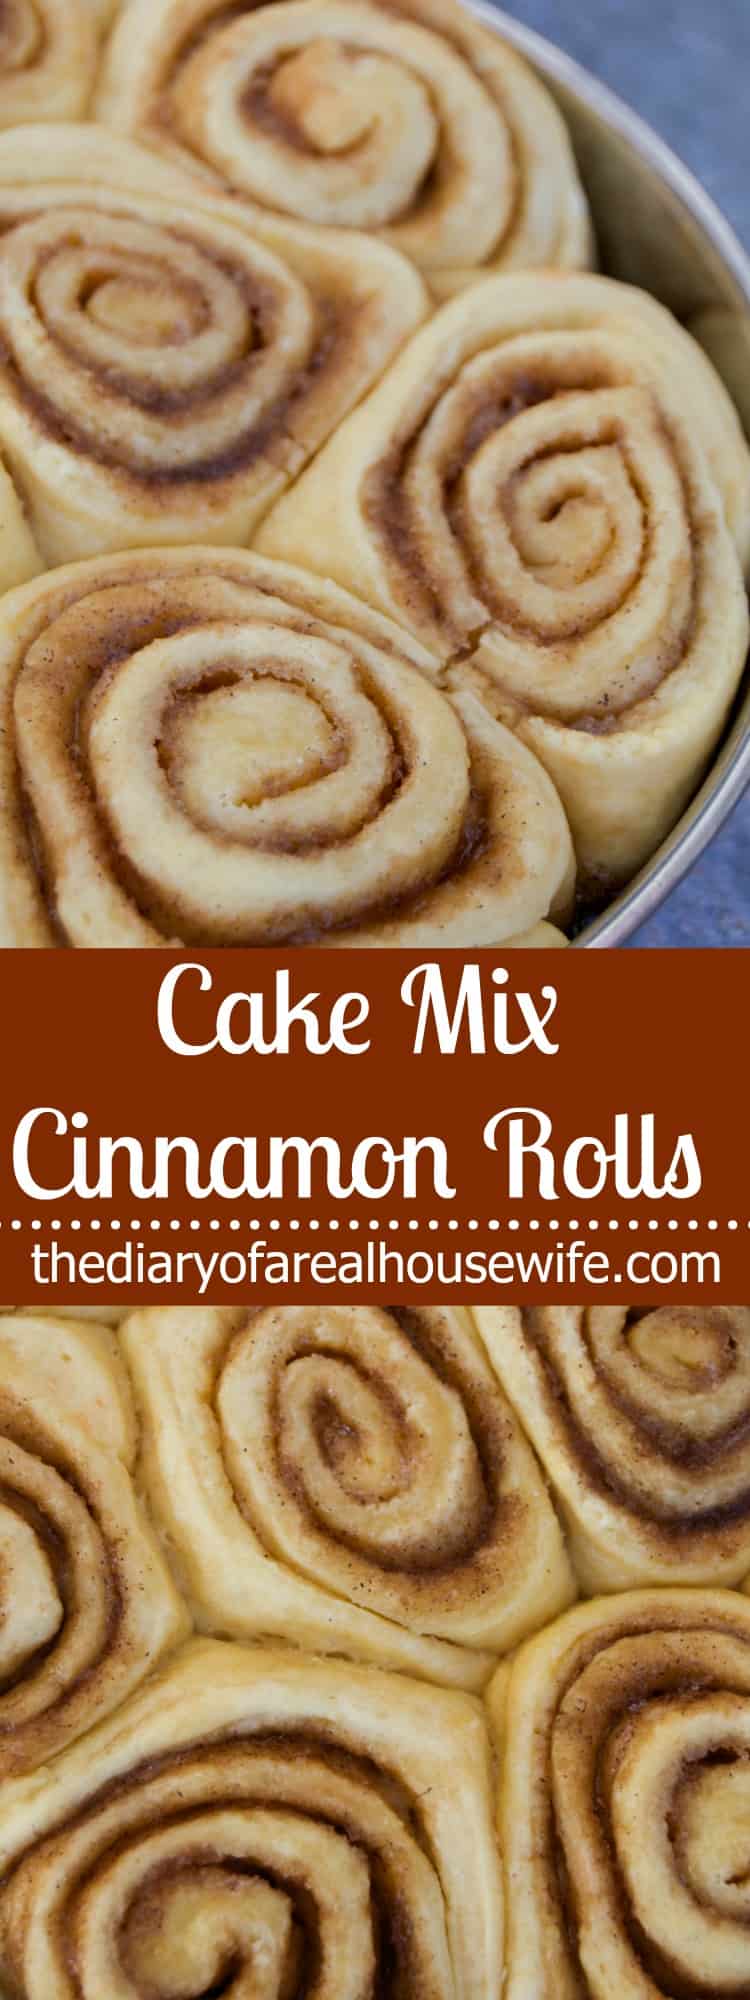 Cake Mix Cinnamon Rolls